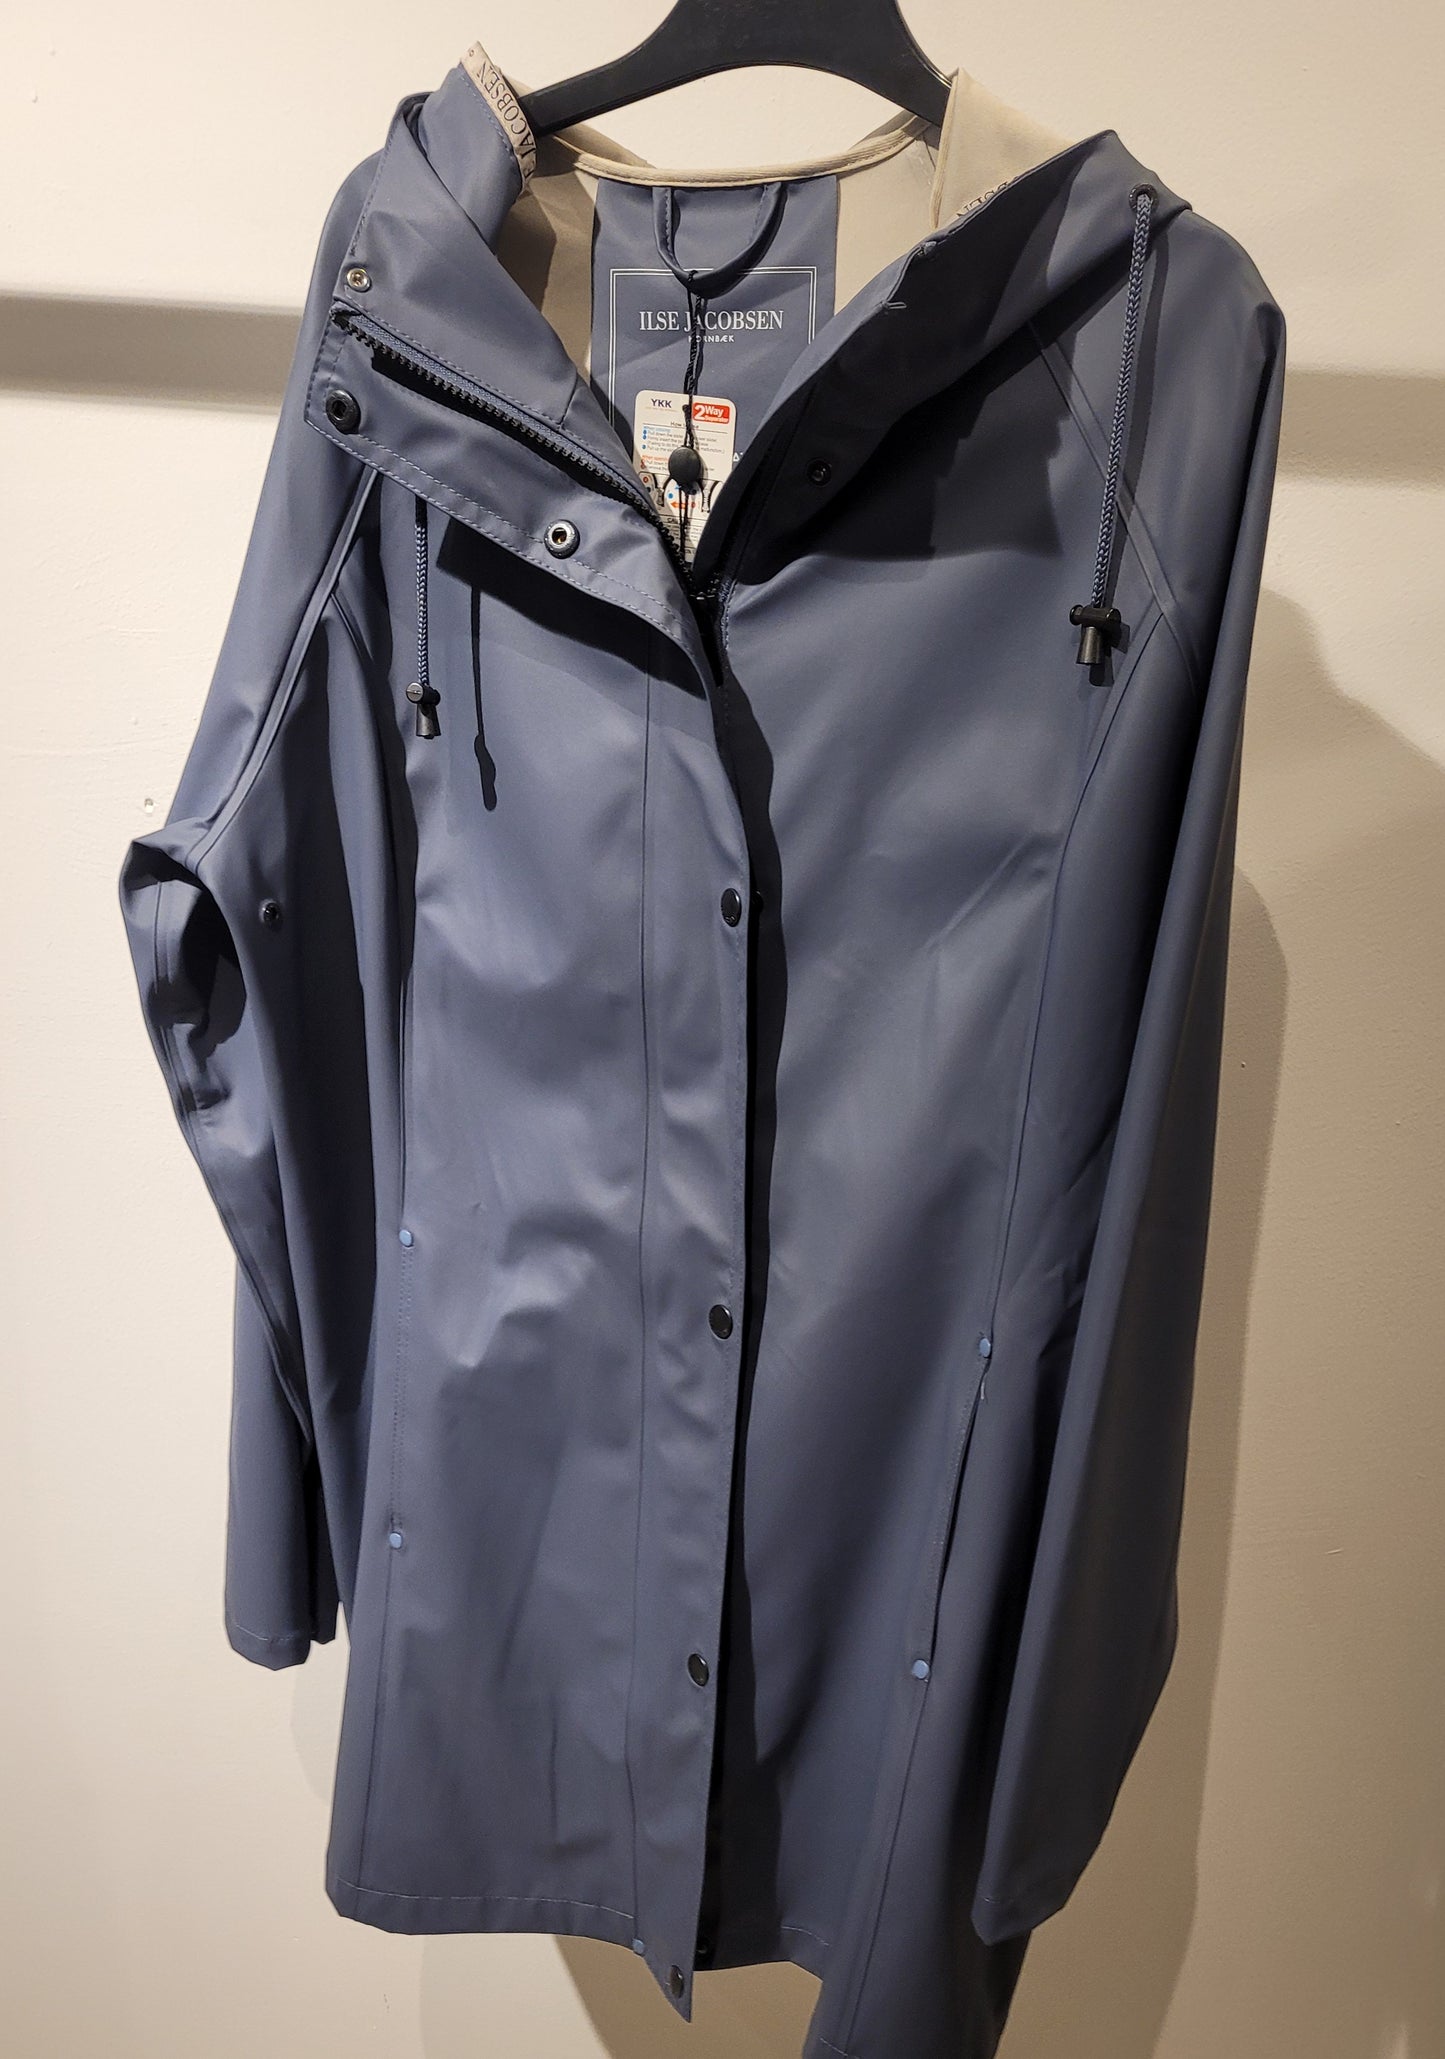 Ilse Jacobsen rubberized raincoat